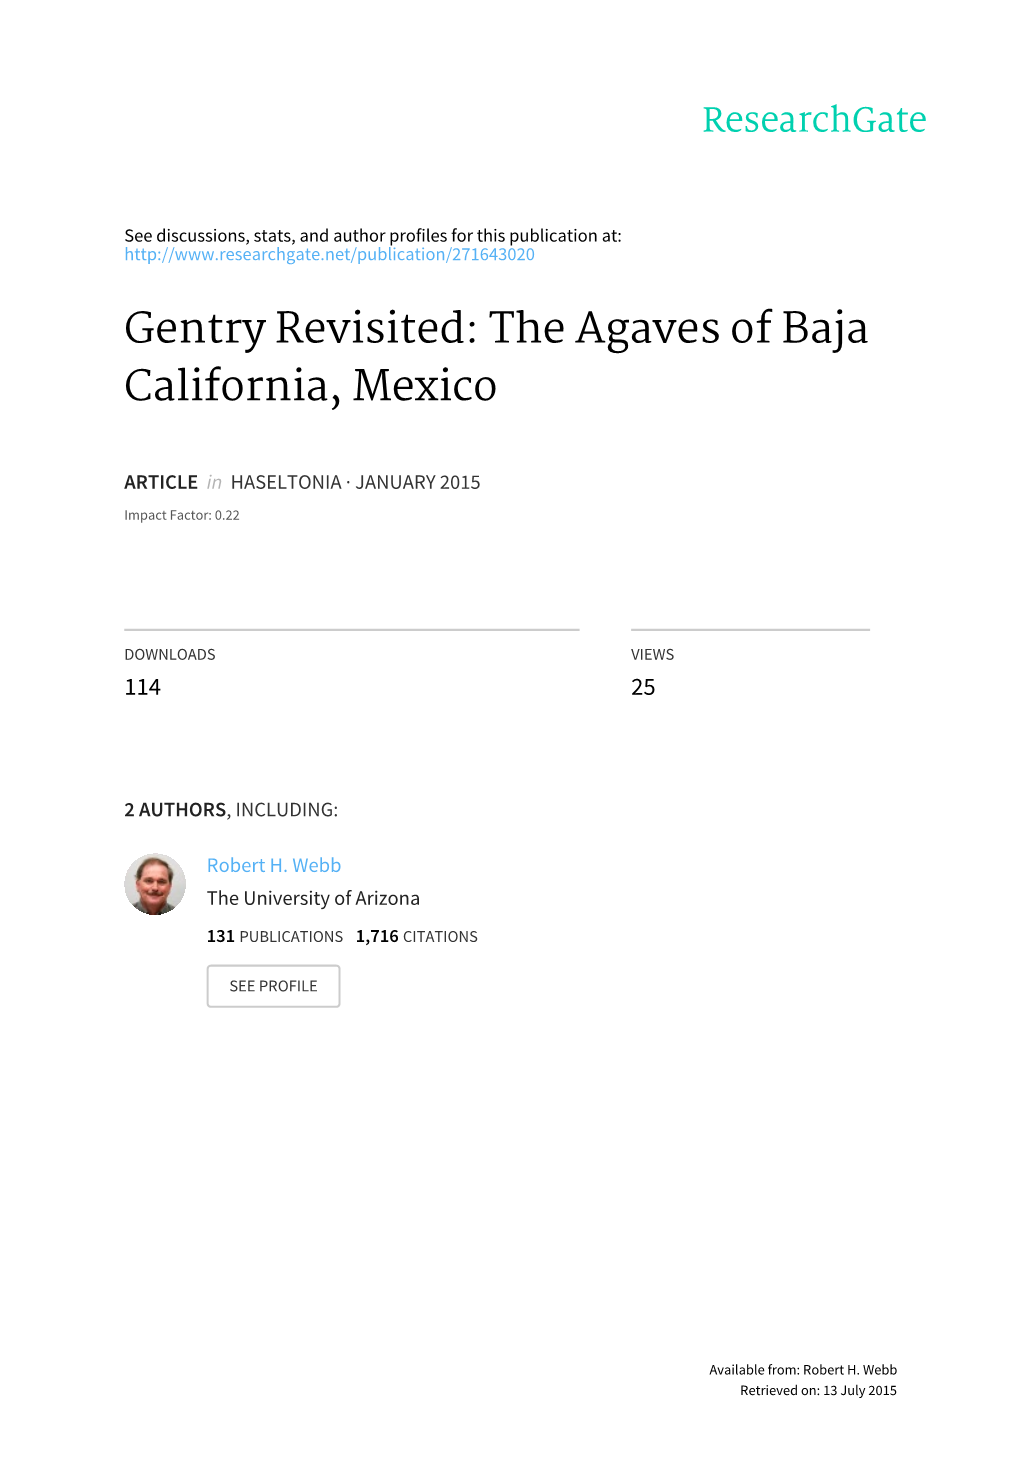 The Agaves of Baja California, Mexico